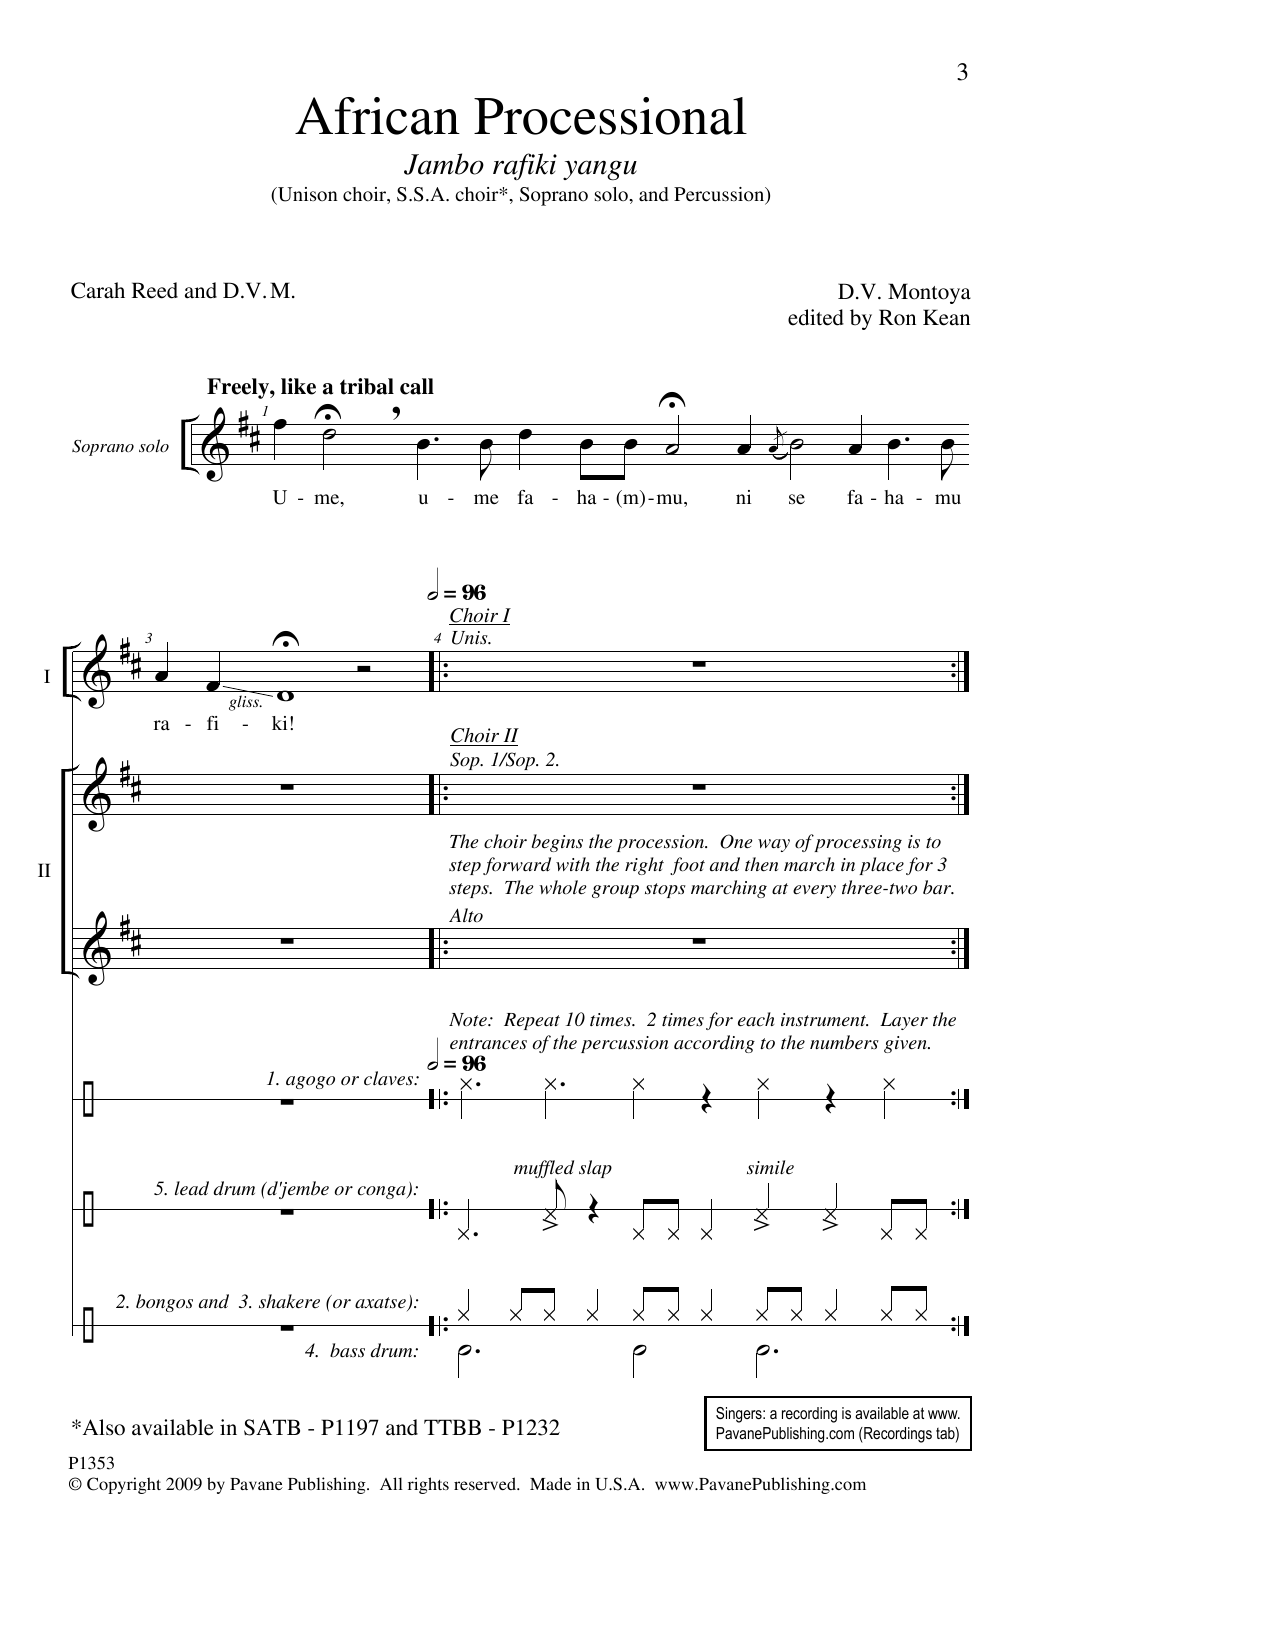 David Montoya African Processional (ed. Ron Kean) Sheet Music Notes & Chords for SSA Choir - Download or Print PDF